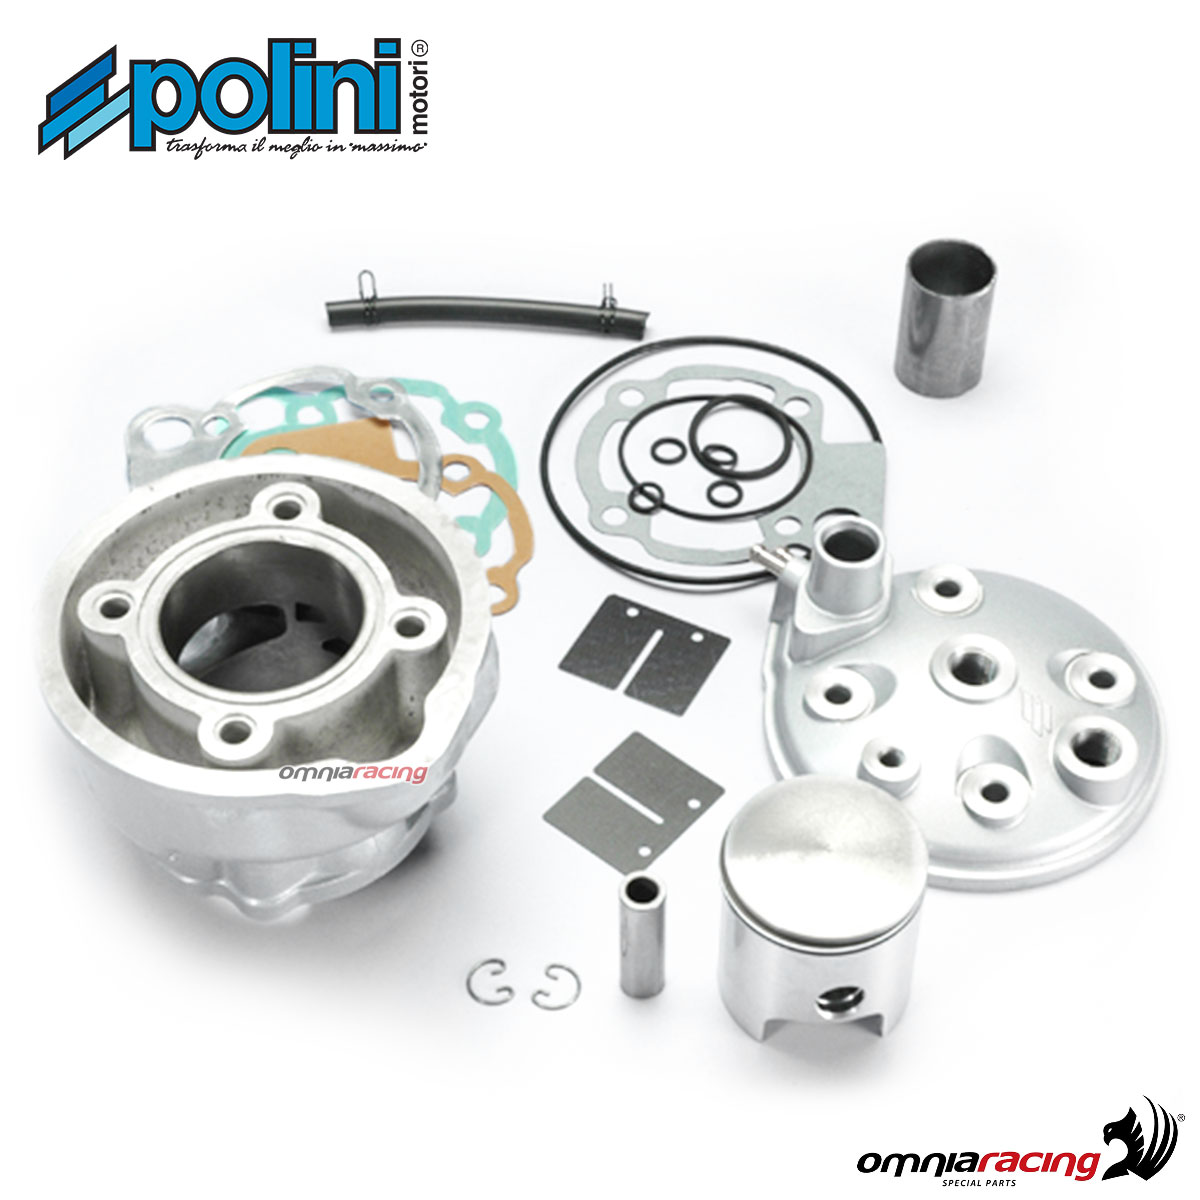 Polini 80cc aluminum cylinder kit for Aprilia Tuono 50 Minarelli AM6 2T